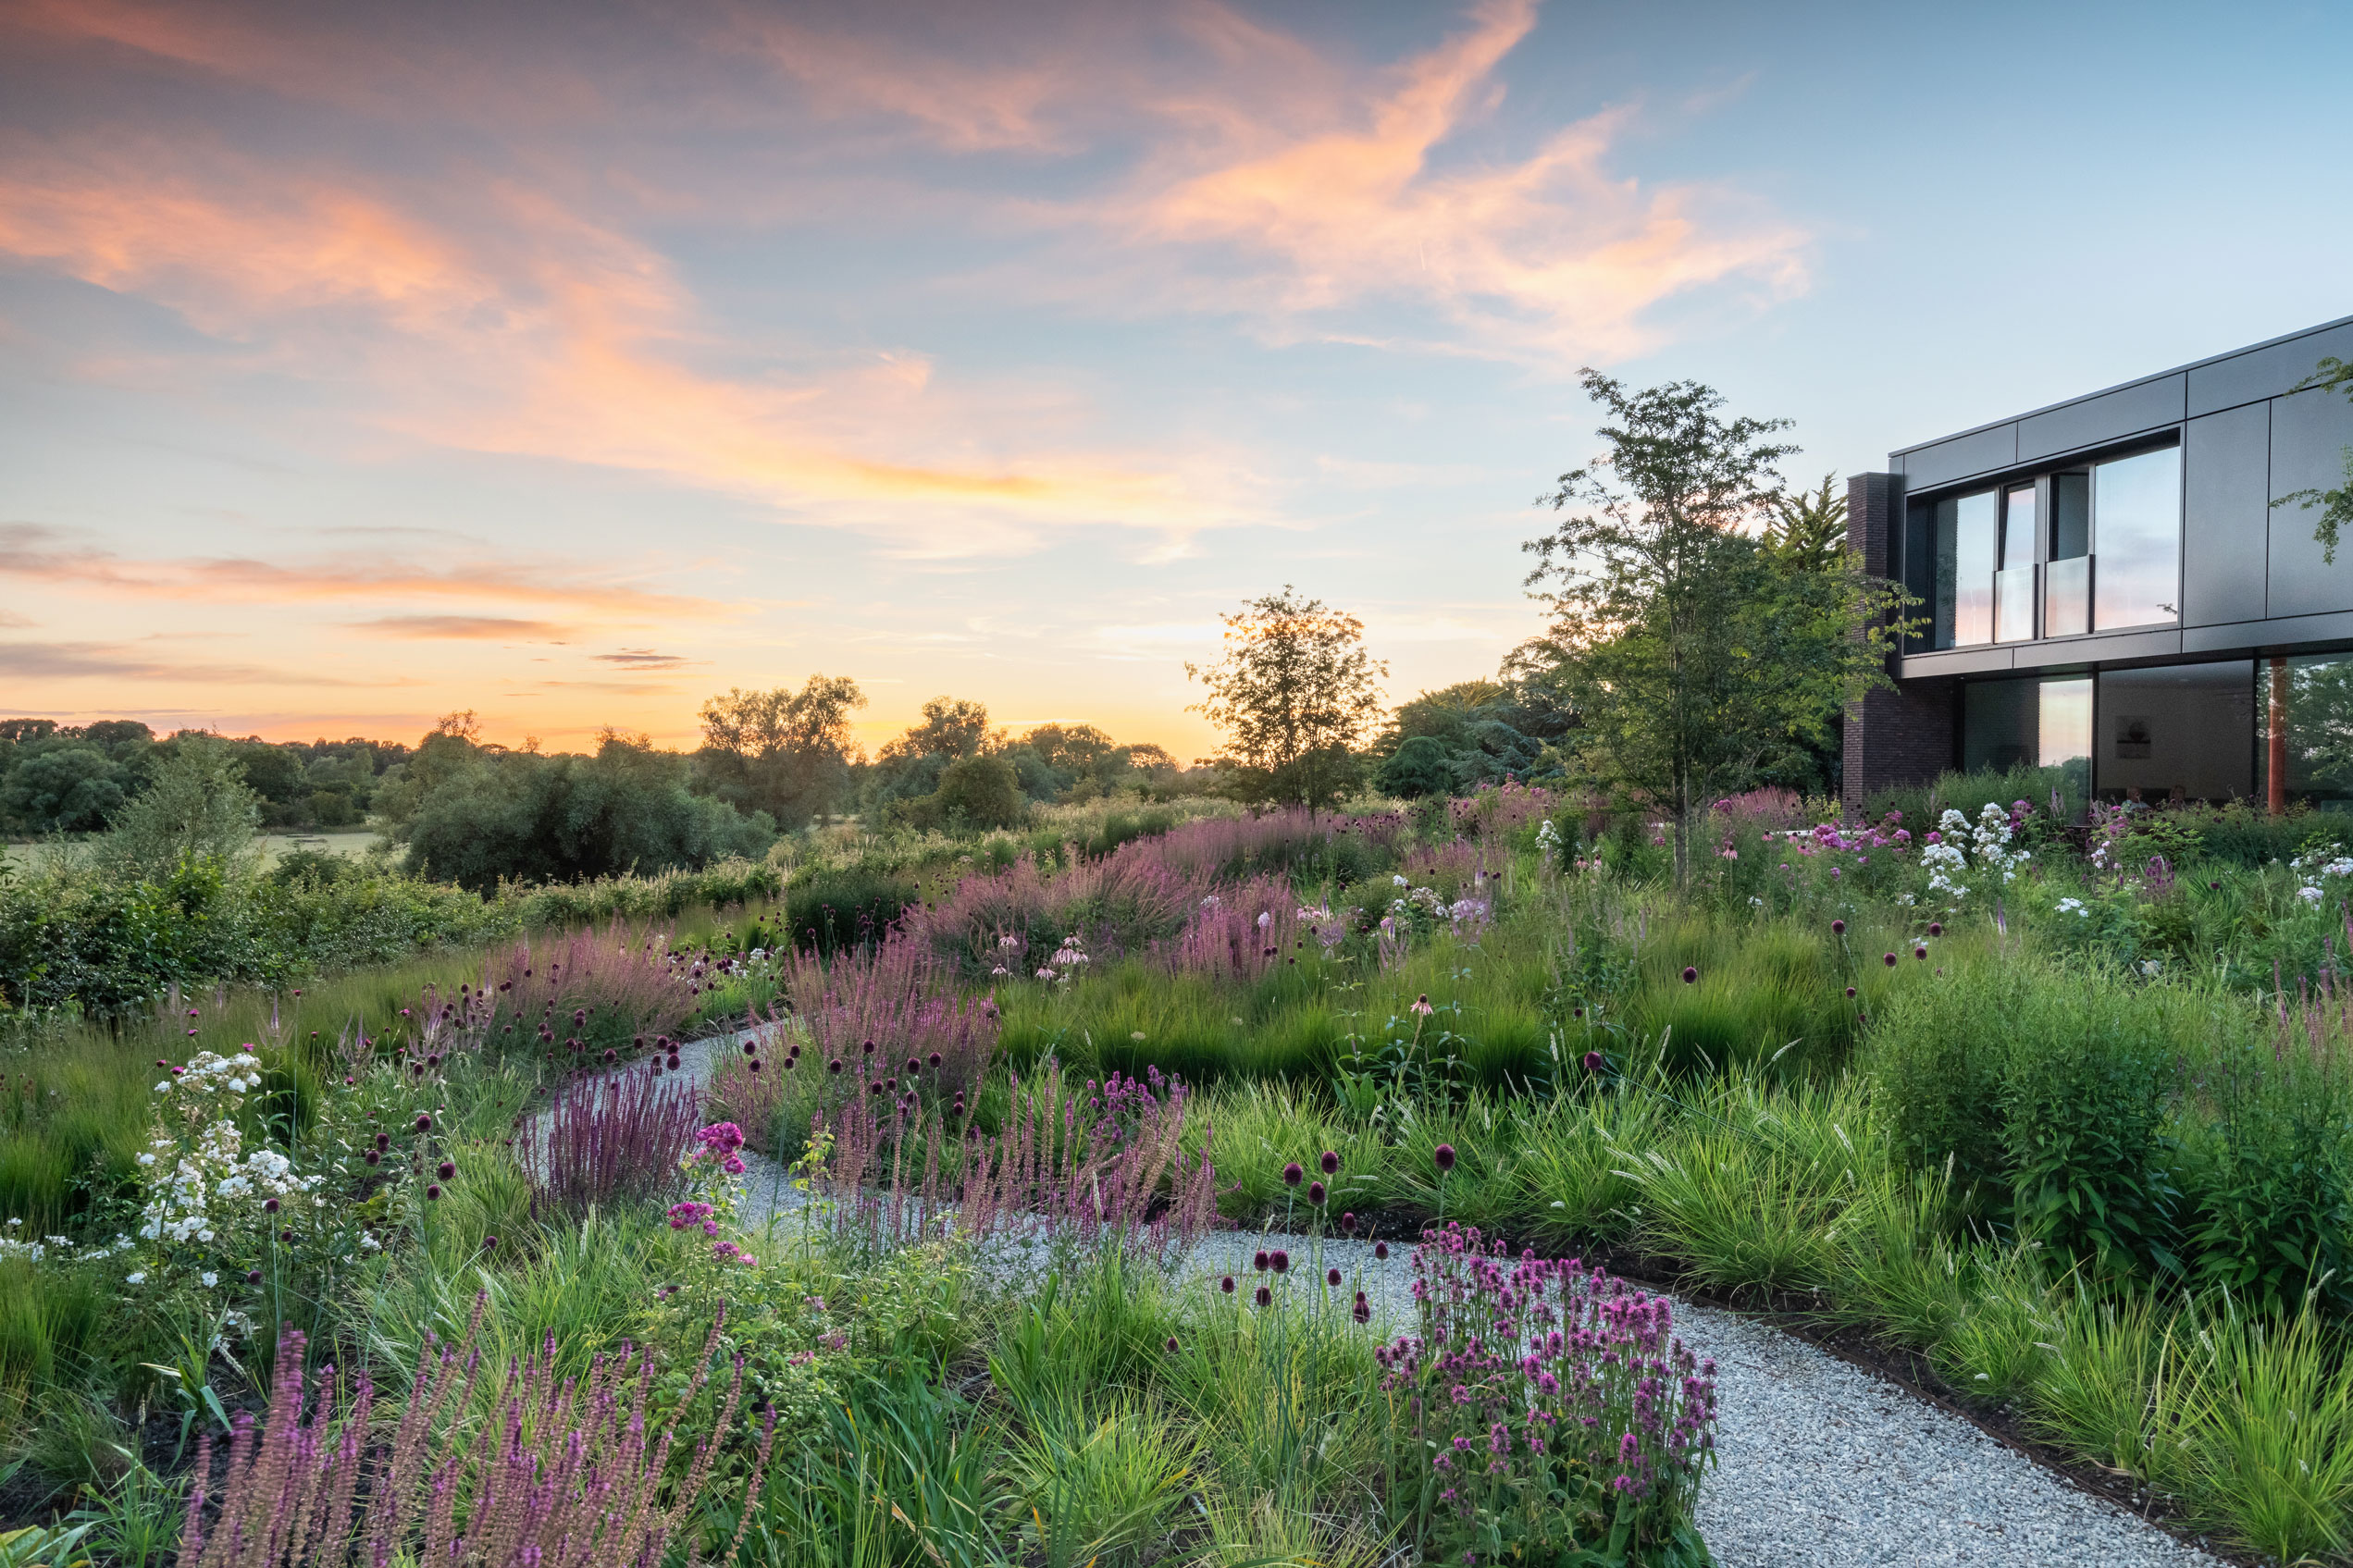 Colm Joseph garden designer cambridgeshire rose meadow modern architecture naturalistic planting design gravel path